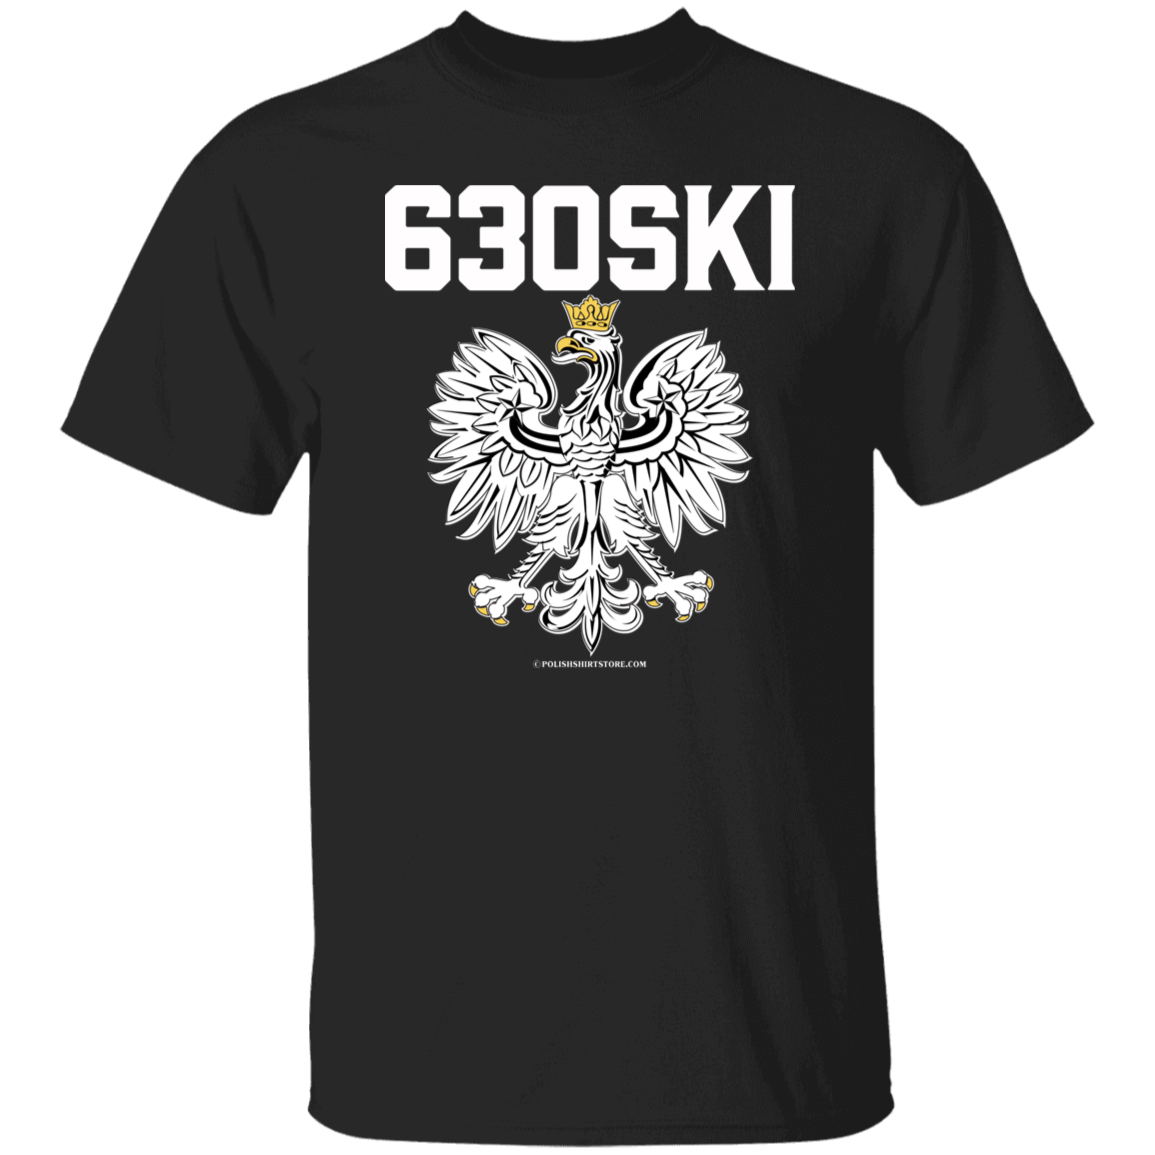 630ski Apparel CustomCat G500 5.3 oz. T-Shirt Black S